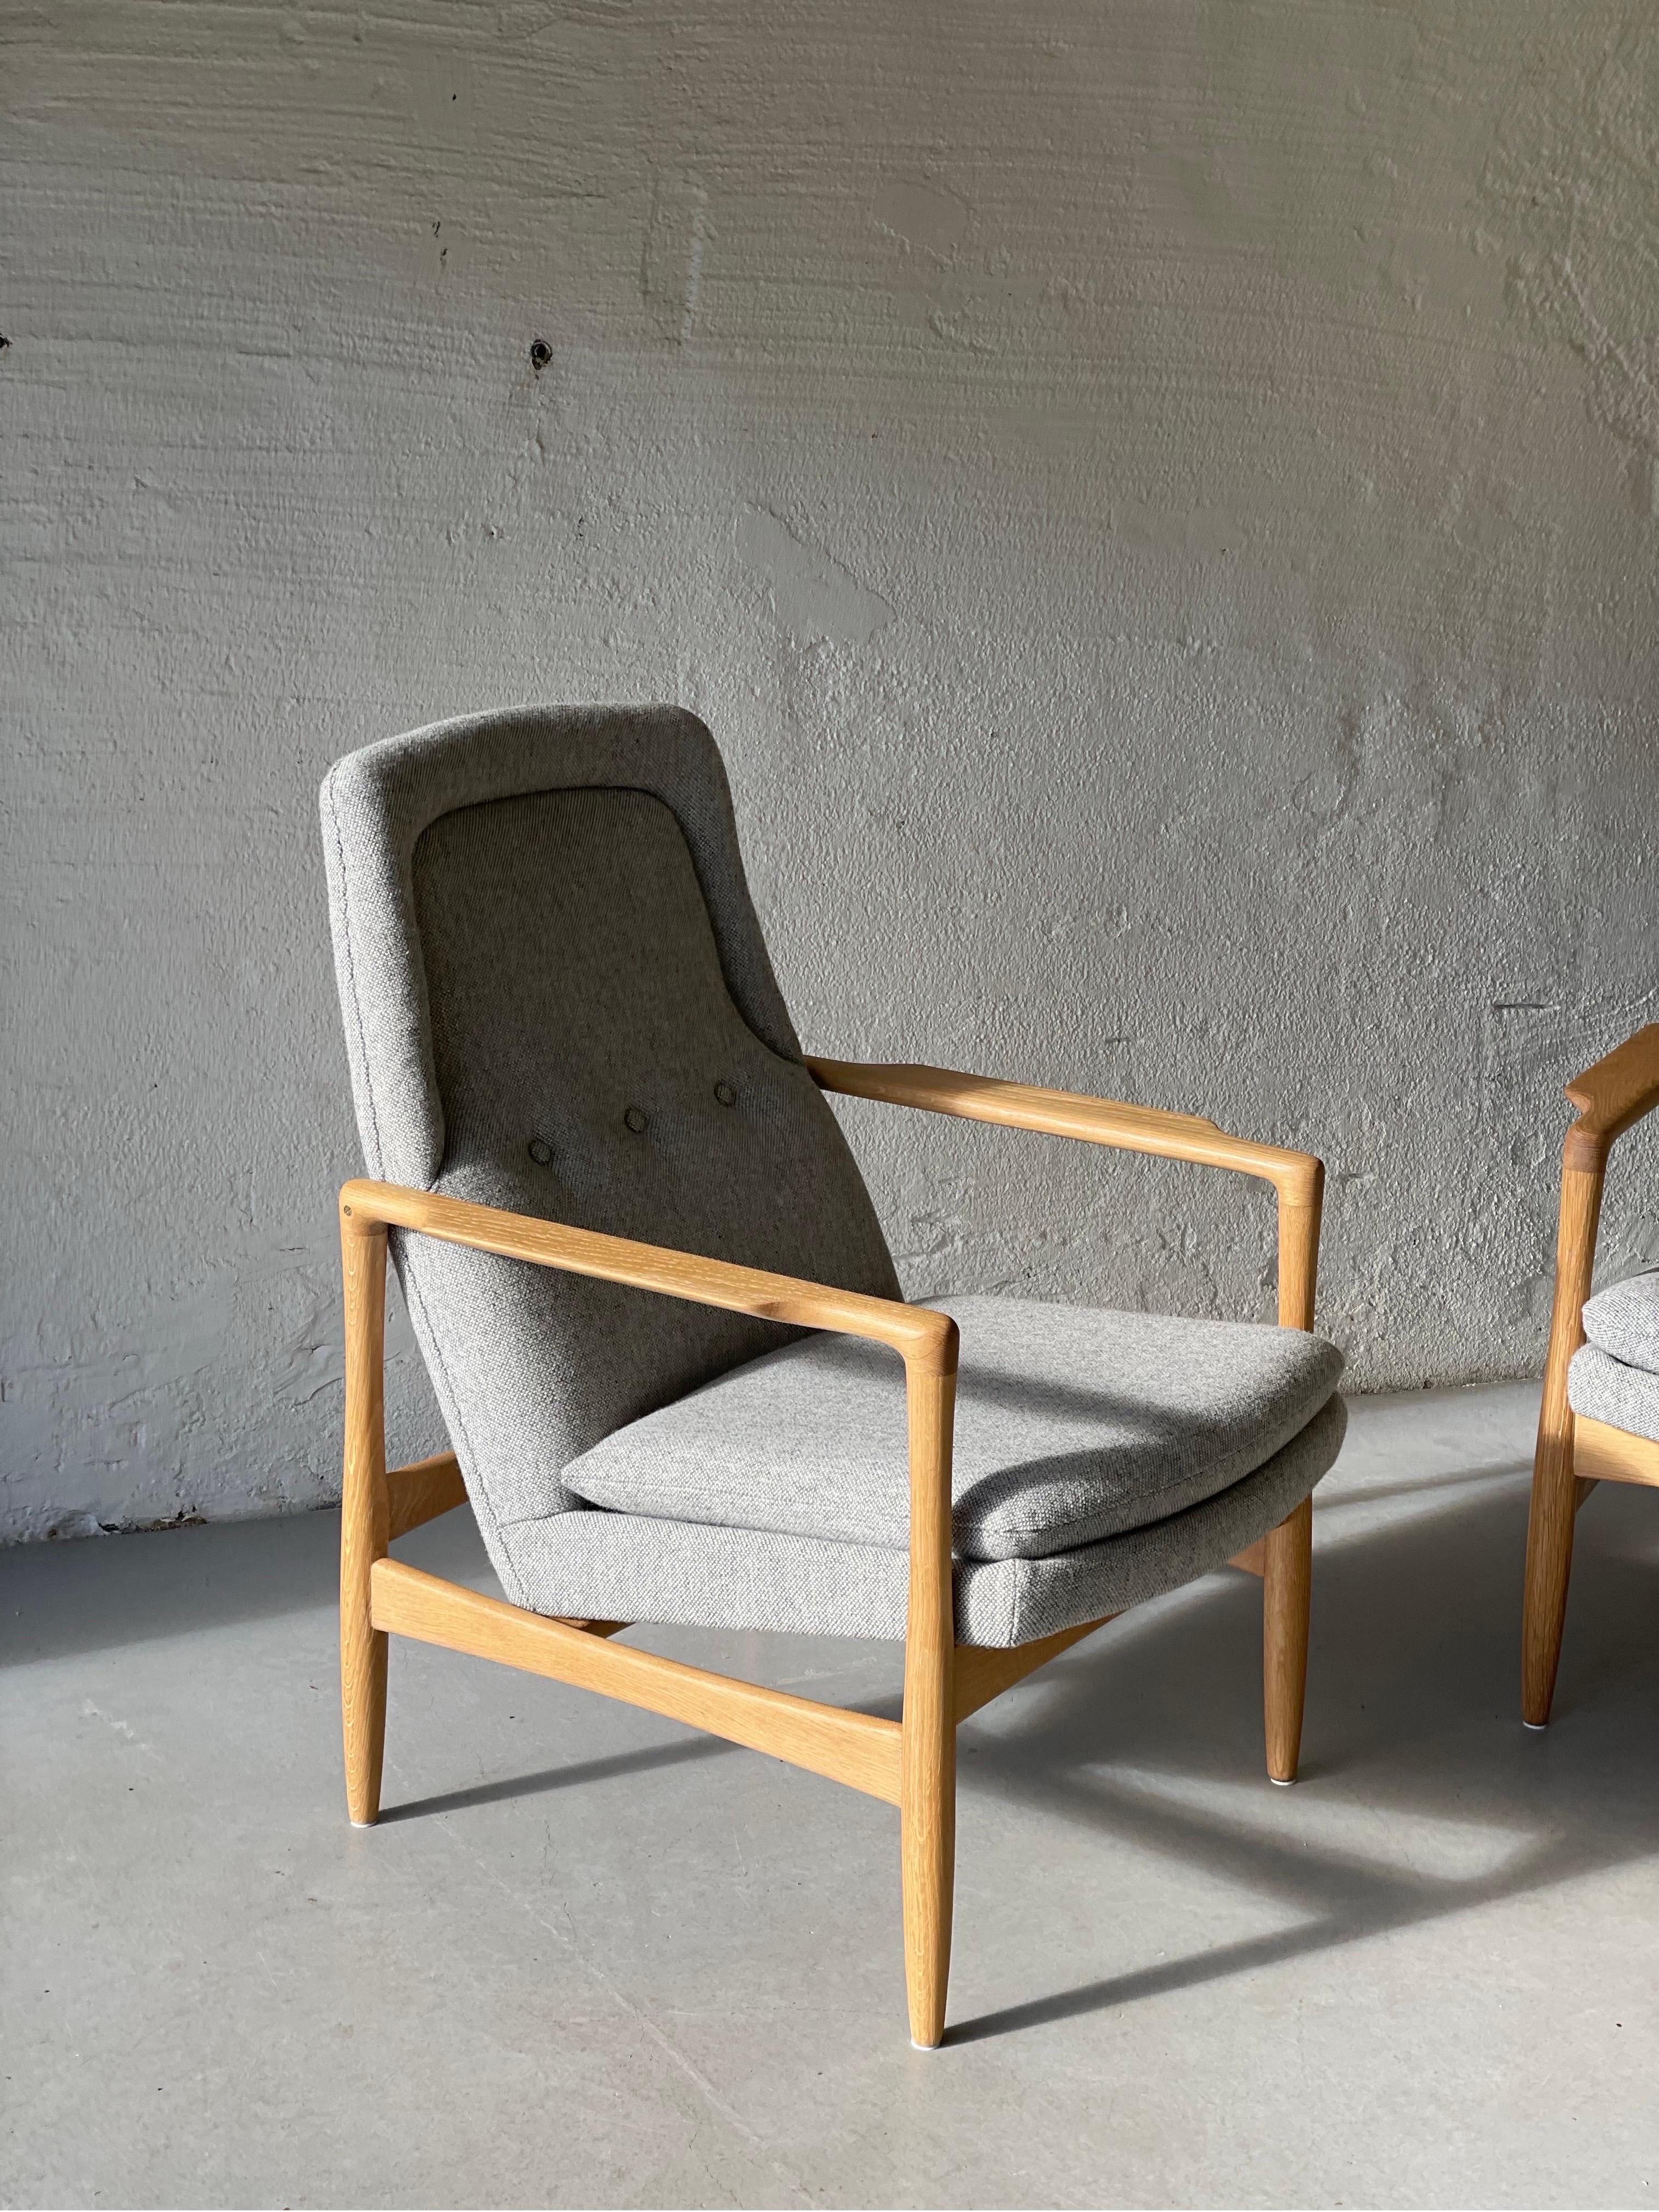 Fabric Norwegian Midcentury - Modern chairs, Torbjørn Afdal, 1957